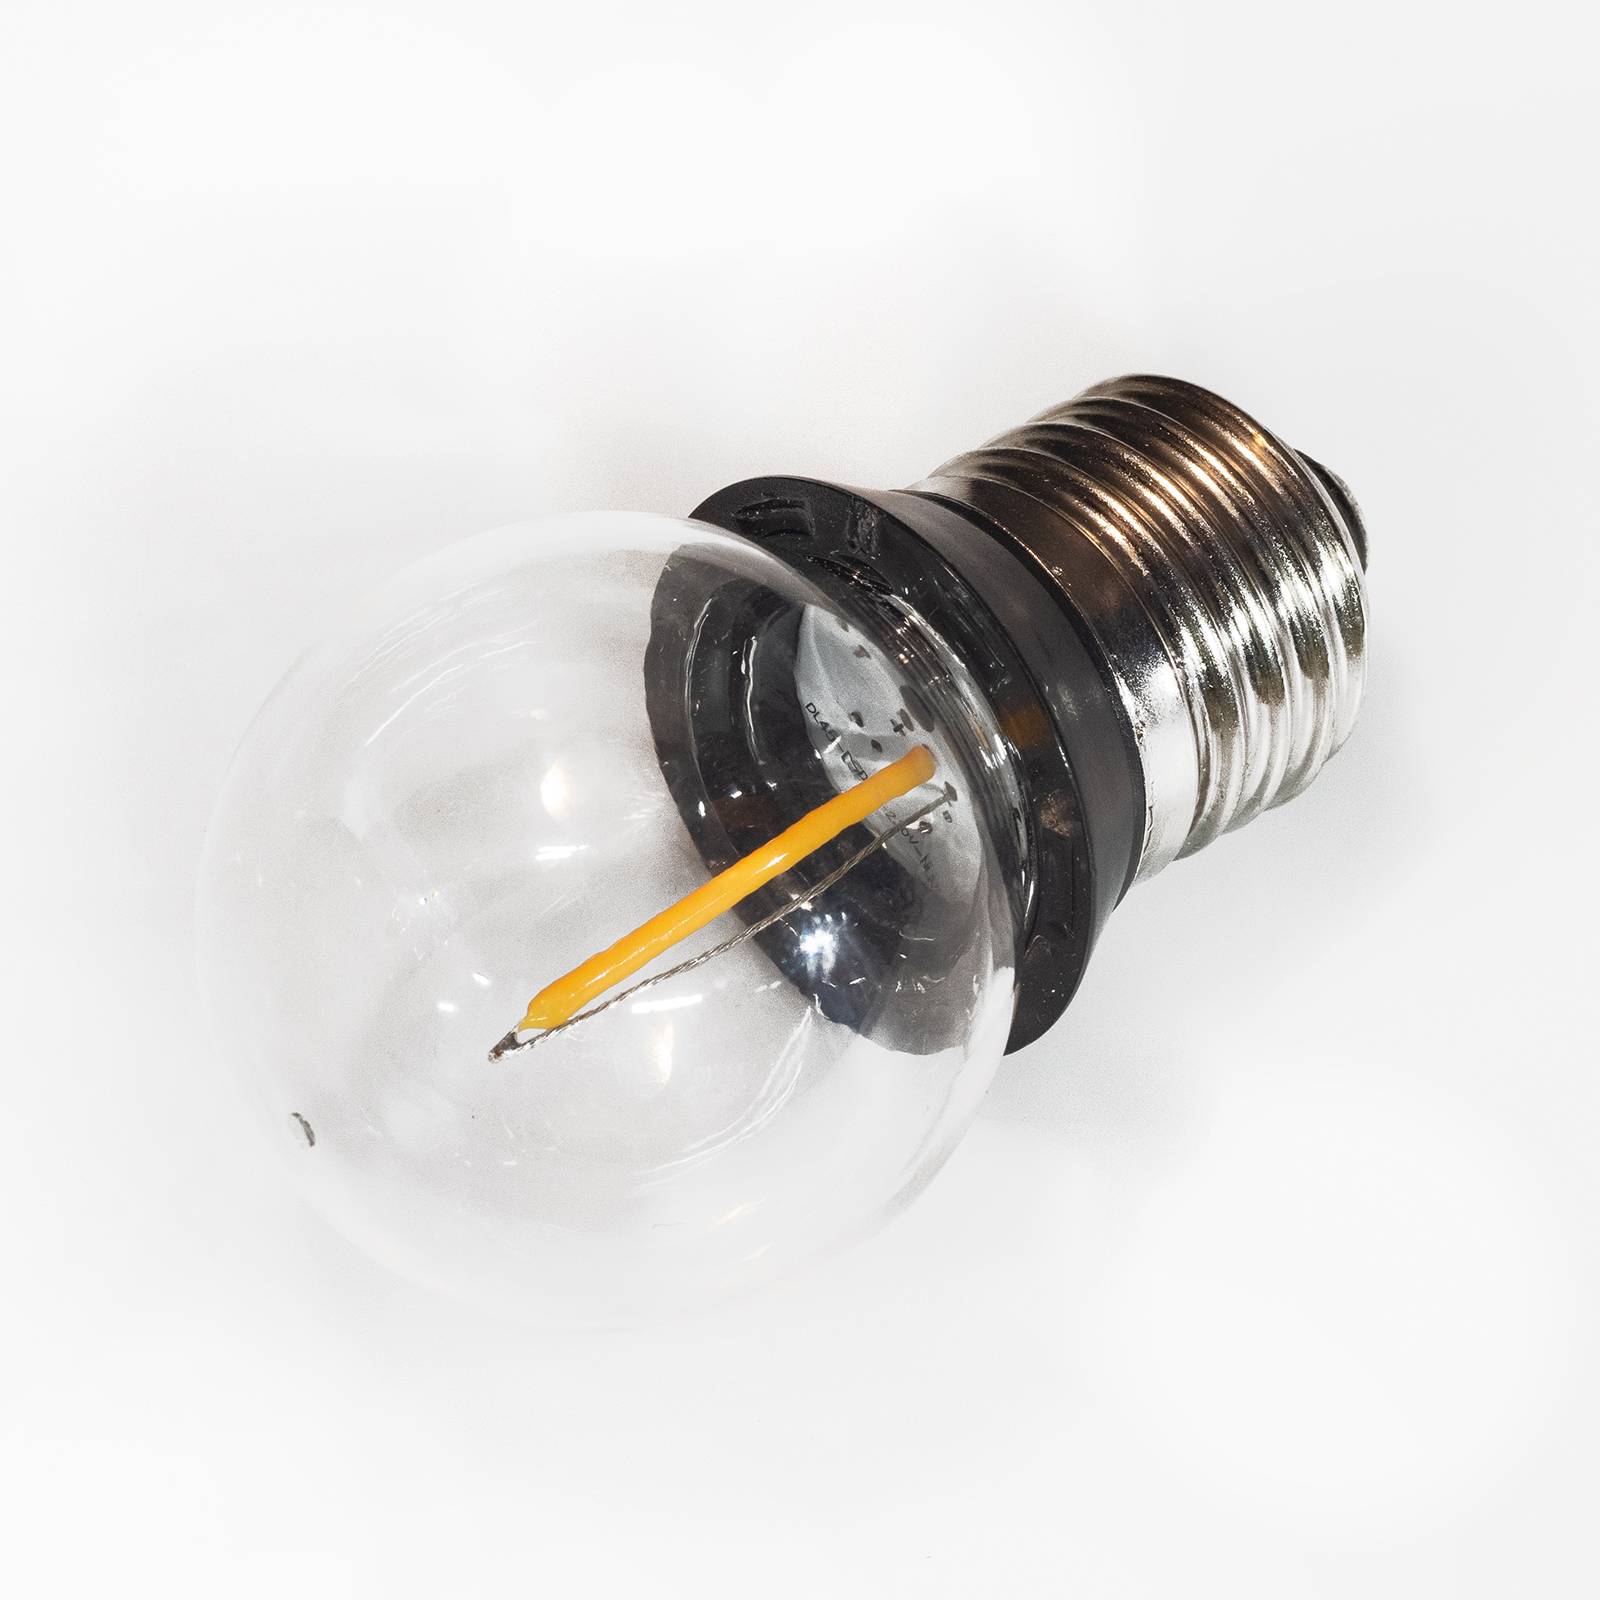 Rotpfeil E27 0,9W COB-LED dropplampa med tätningsring